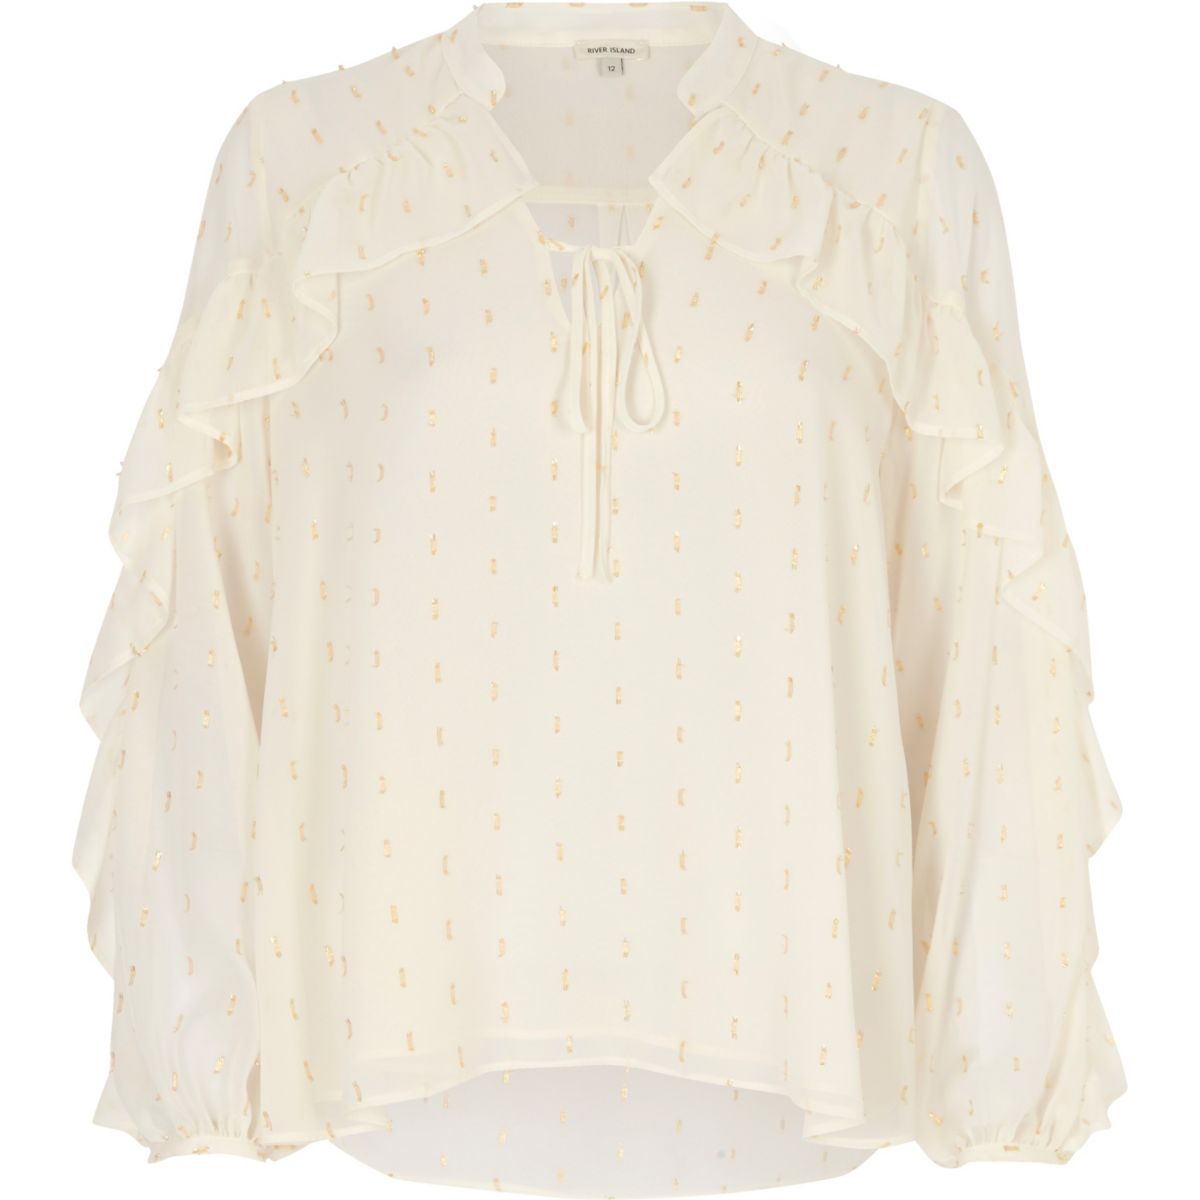 White metallic print frill blouse - Tops - Sale - women